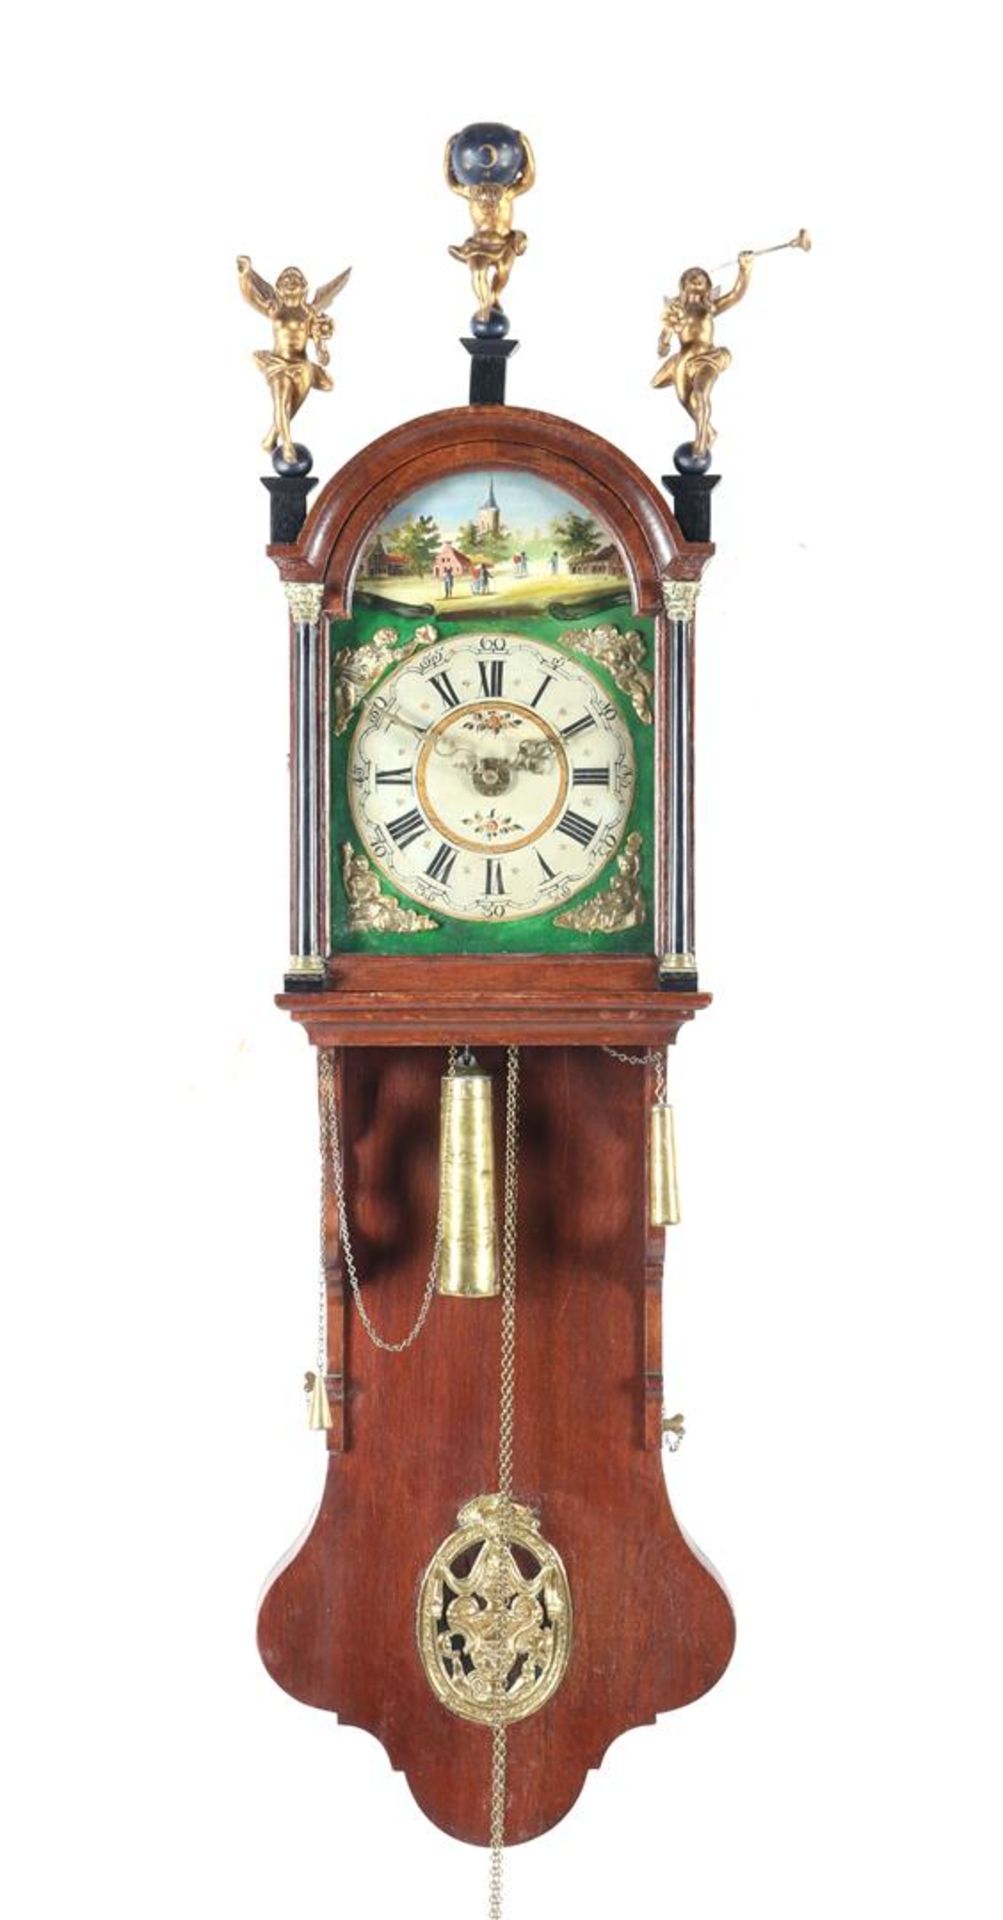 Frisian tail clock